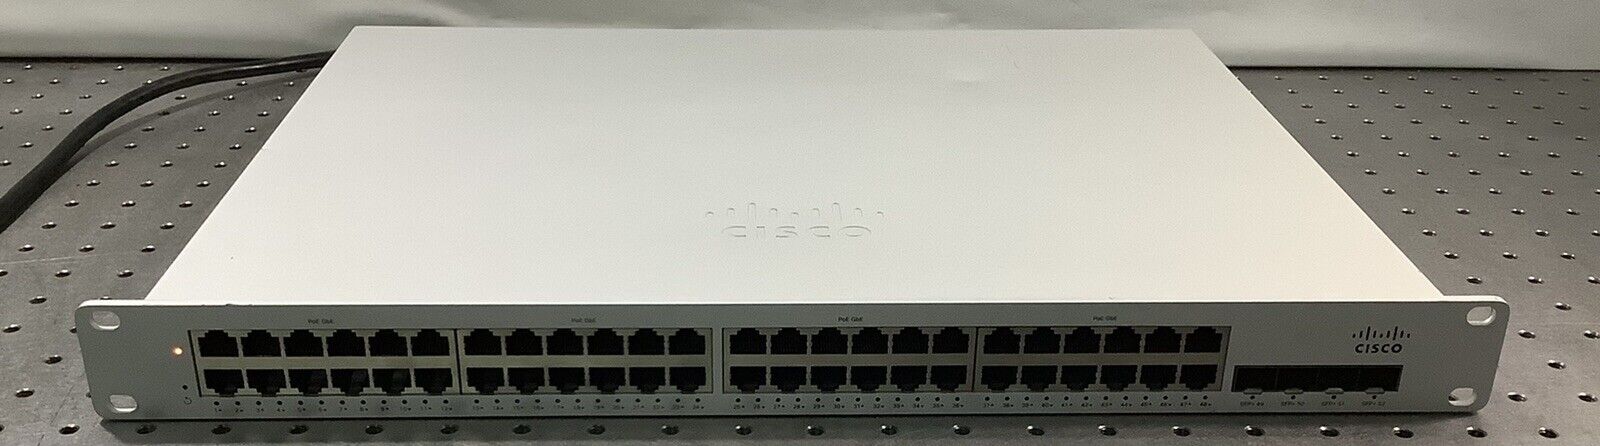 Cisco Meraki 48 Port POE Cloud Managed Switch MS225-48LP